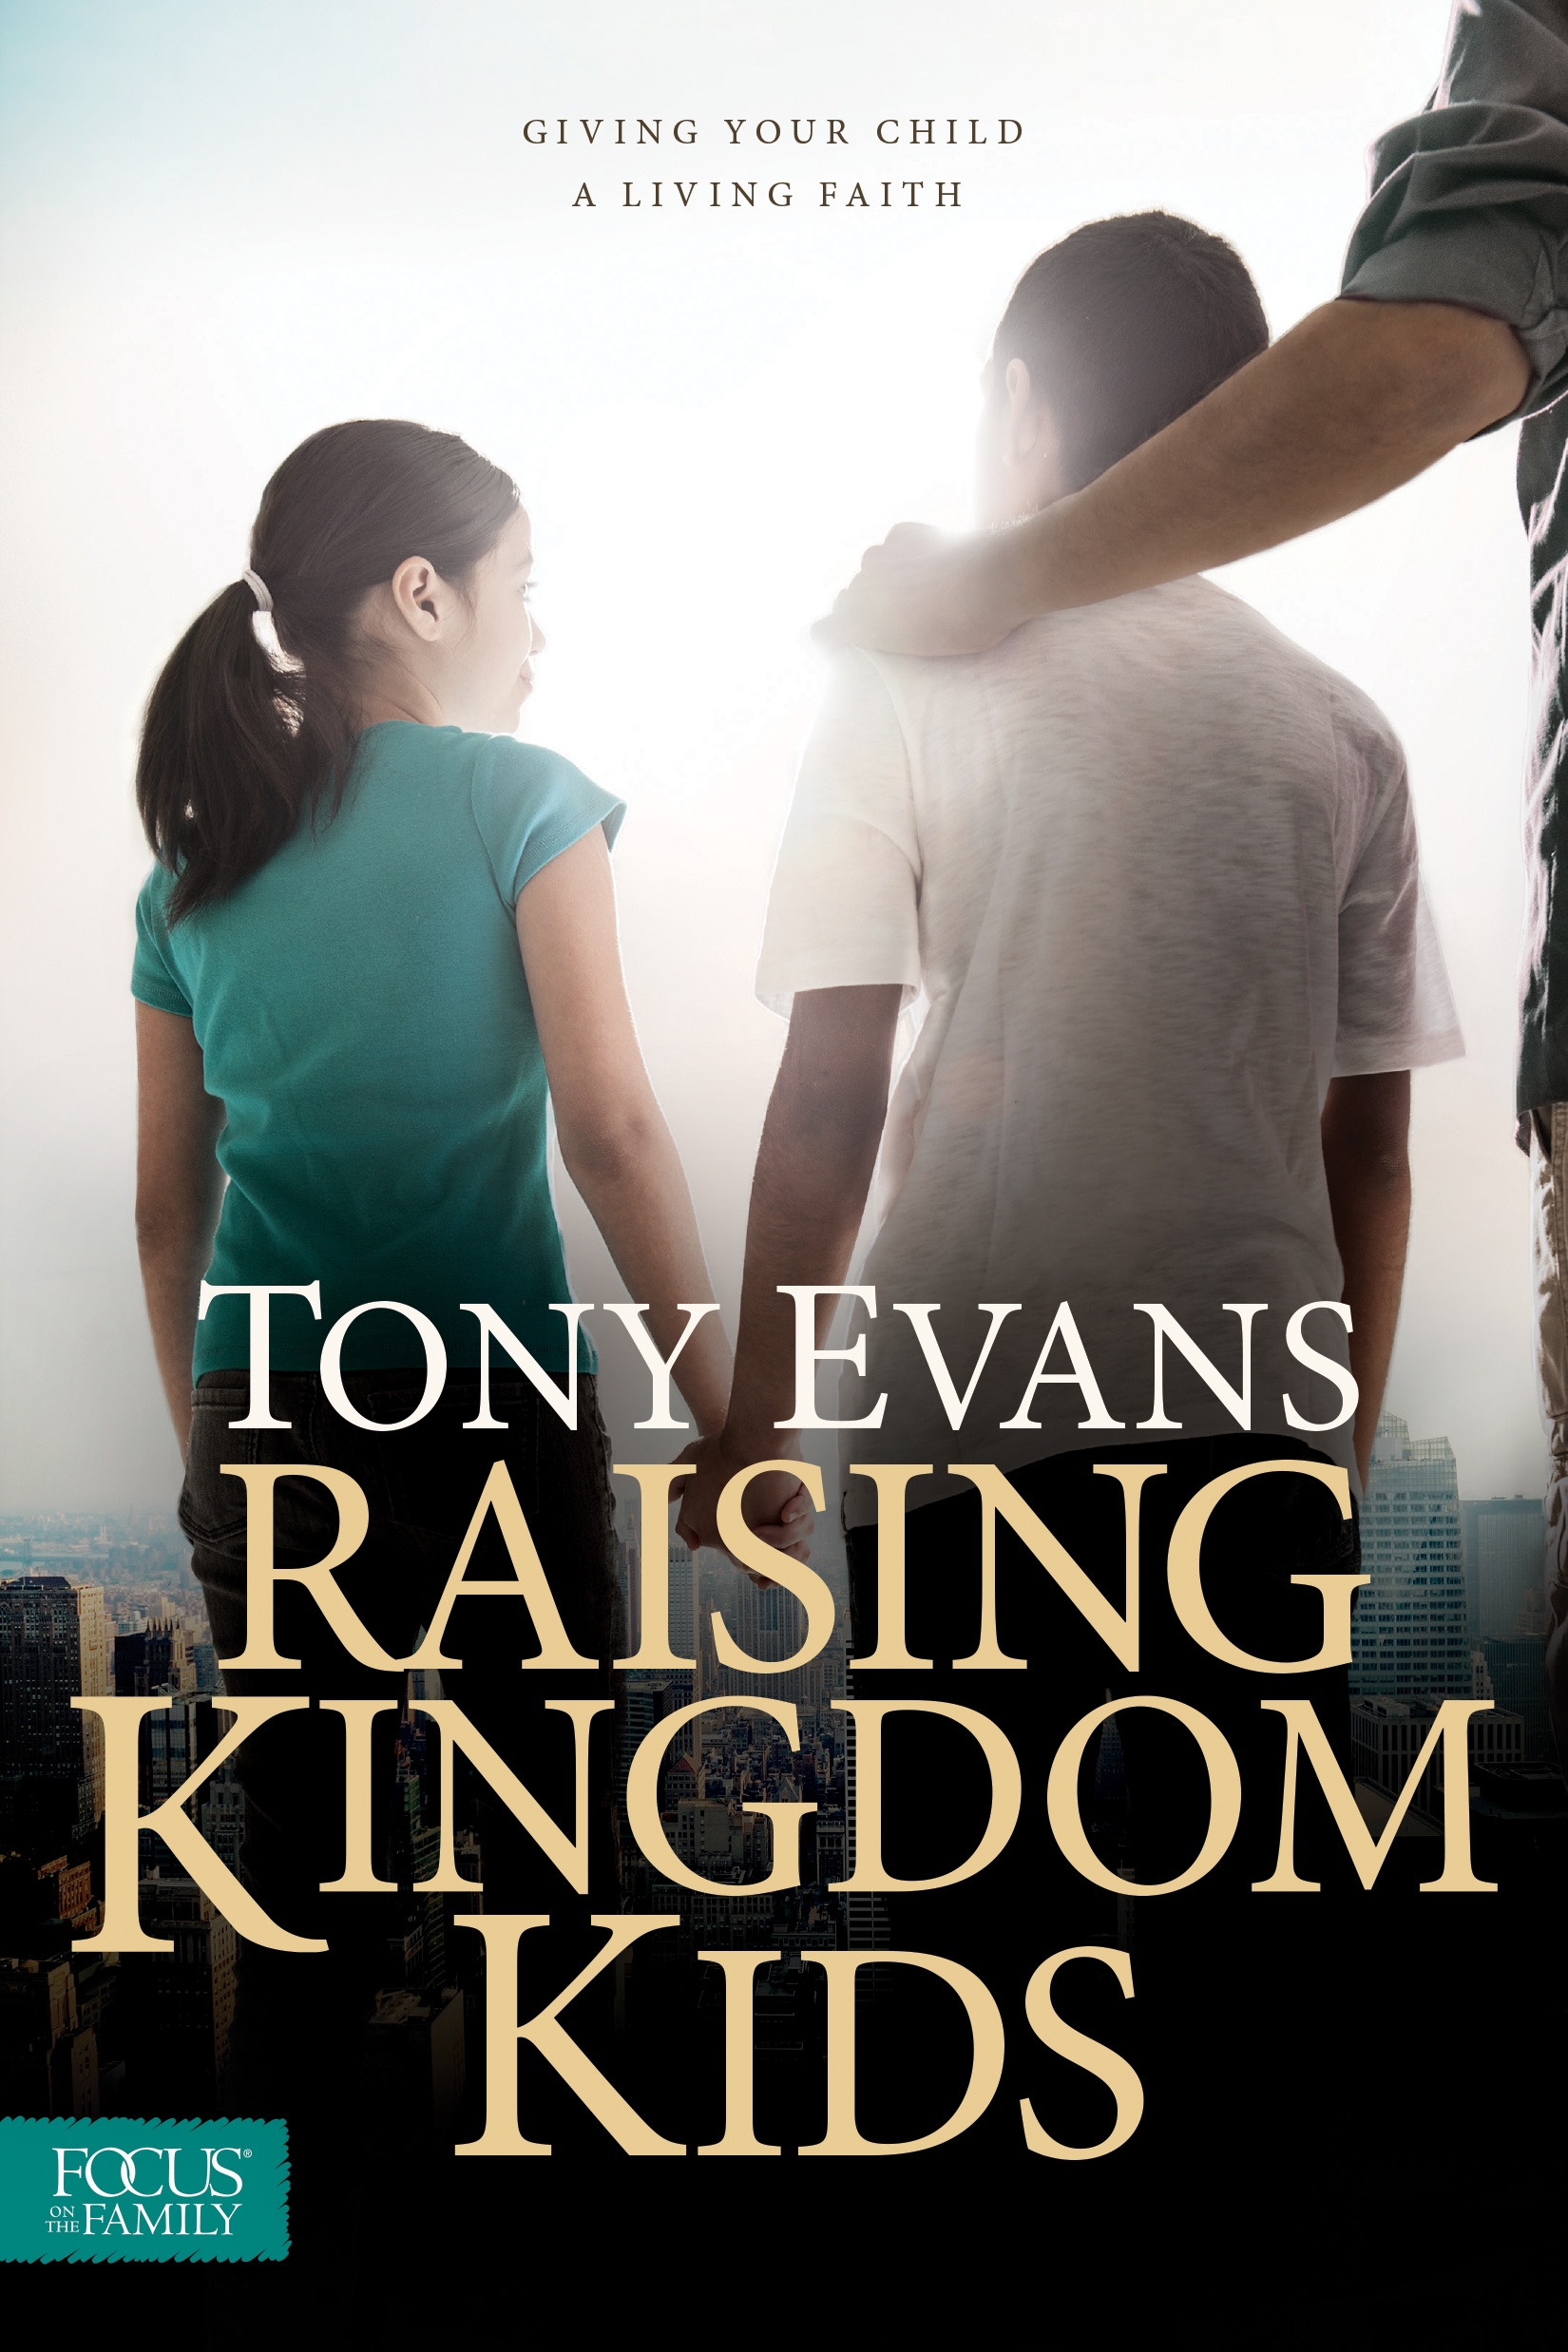 Raising Kingdom Kids by Tony Evans